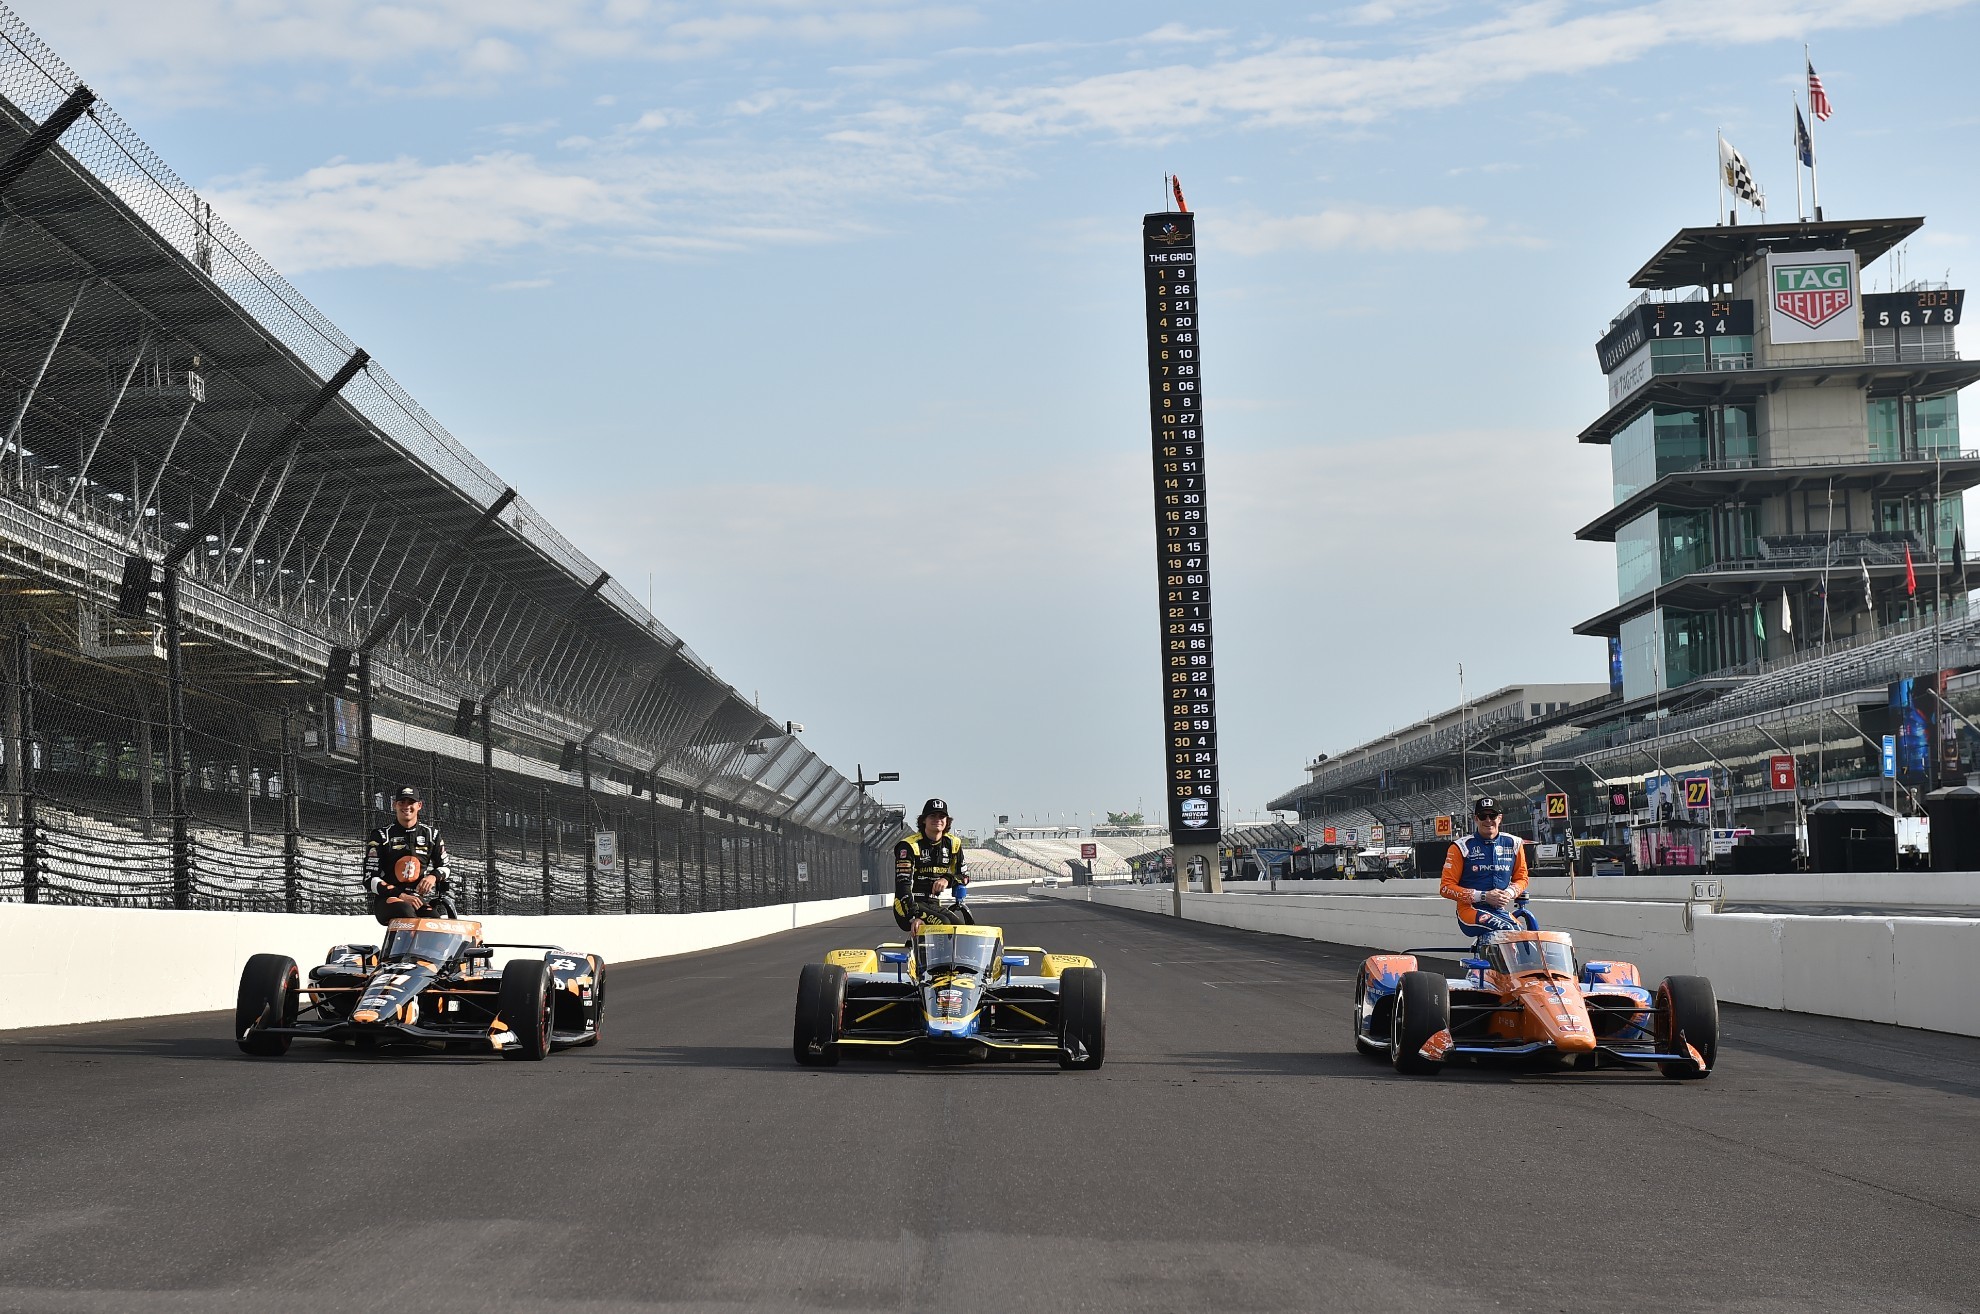 Indy 500 2022 - 500 Millas de Indianapolis 2022 - Fast 12 - Fast 6 - clasificacion